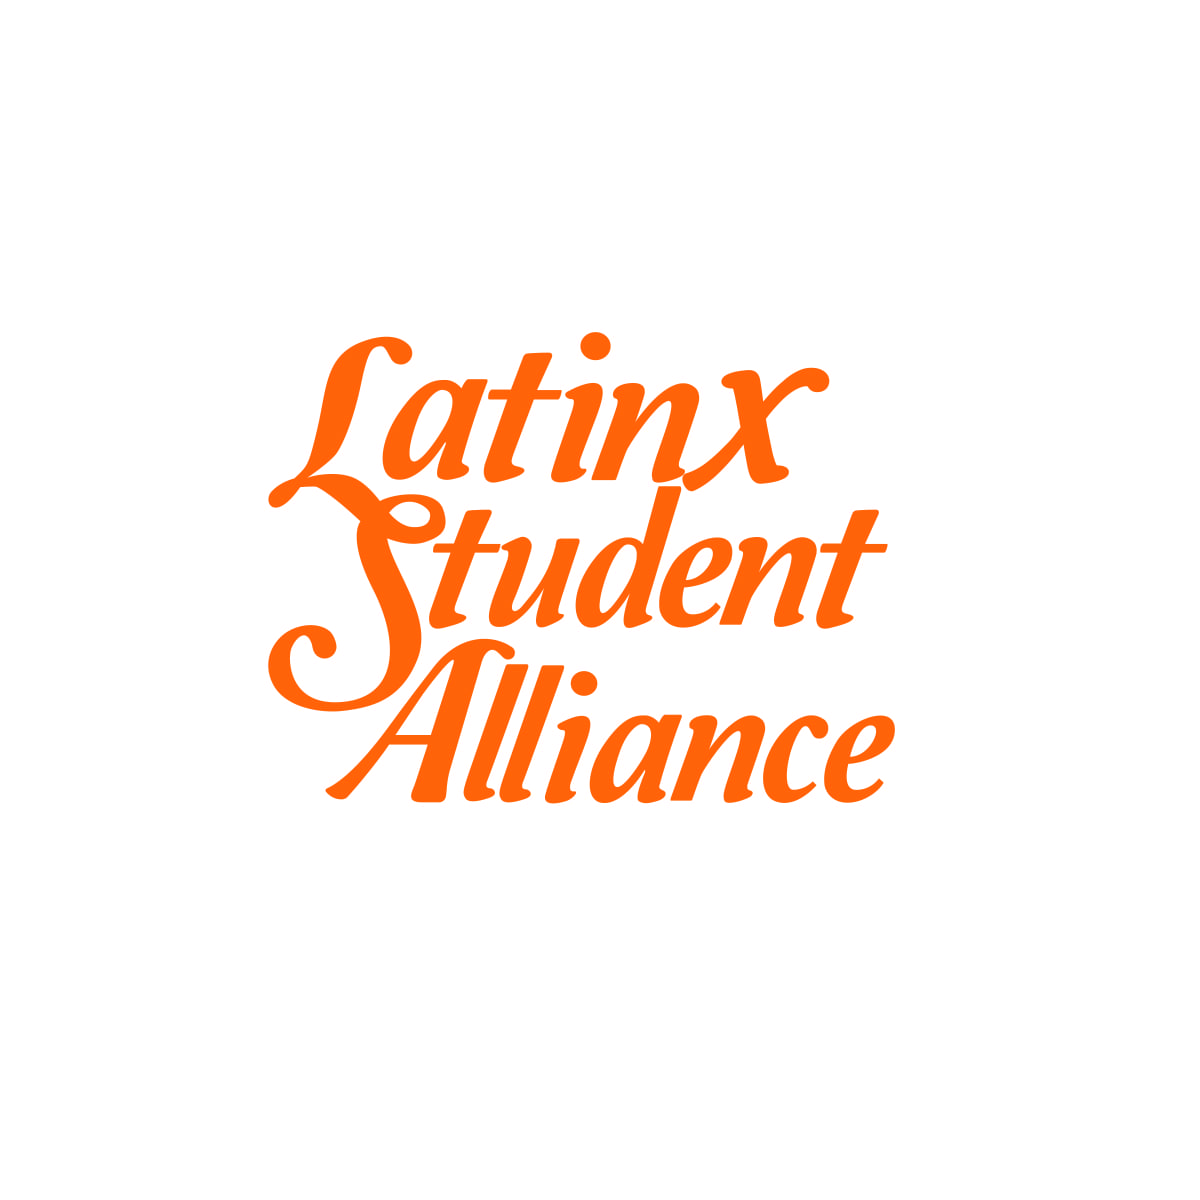 latinx student alliance logo